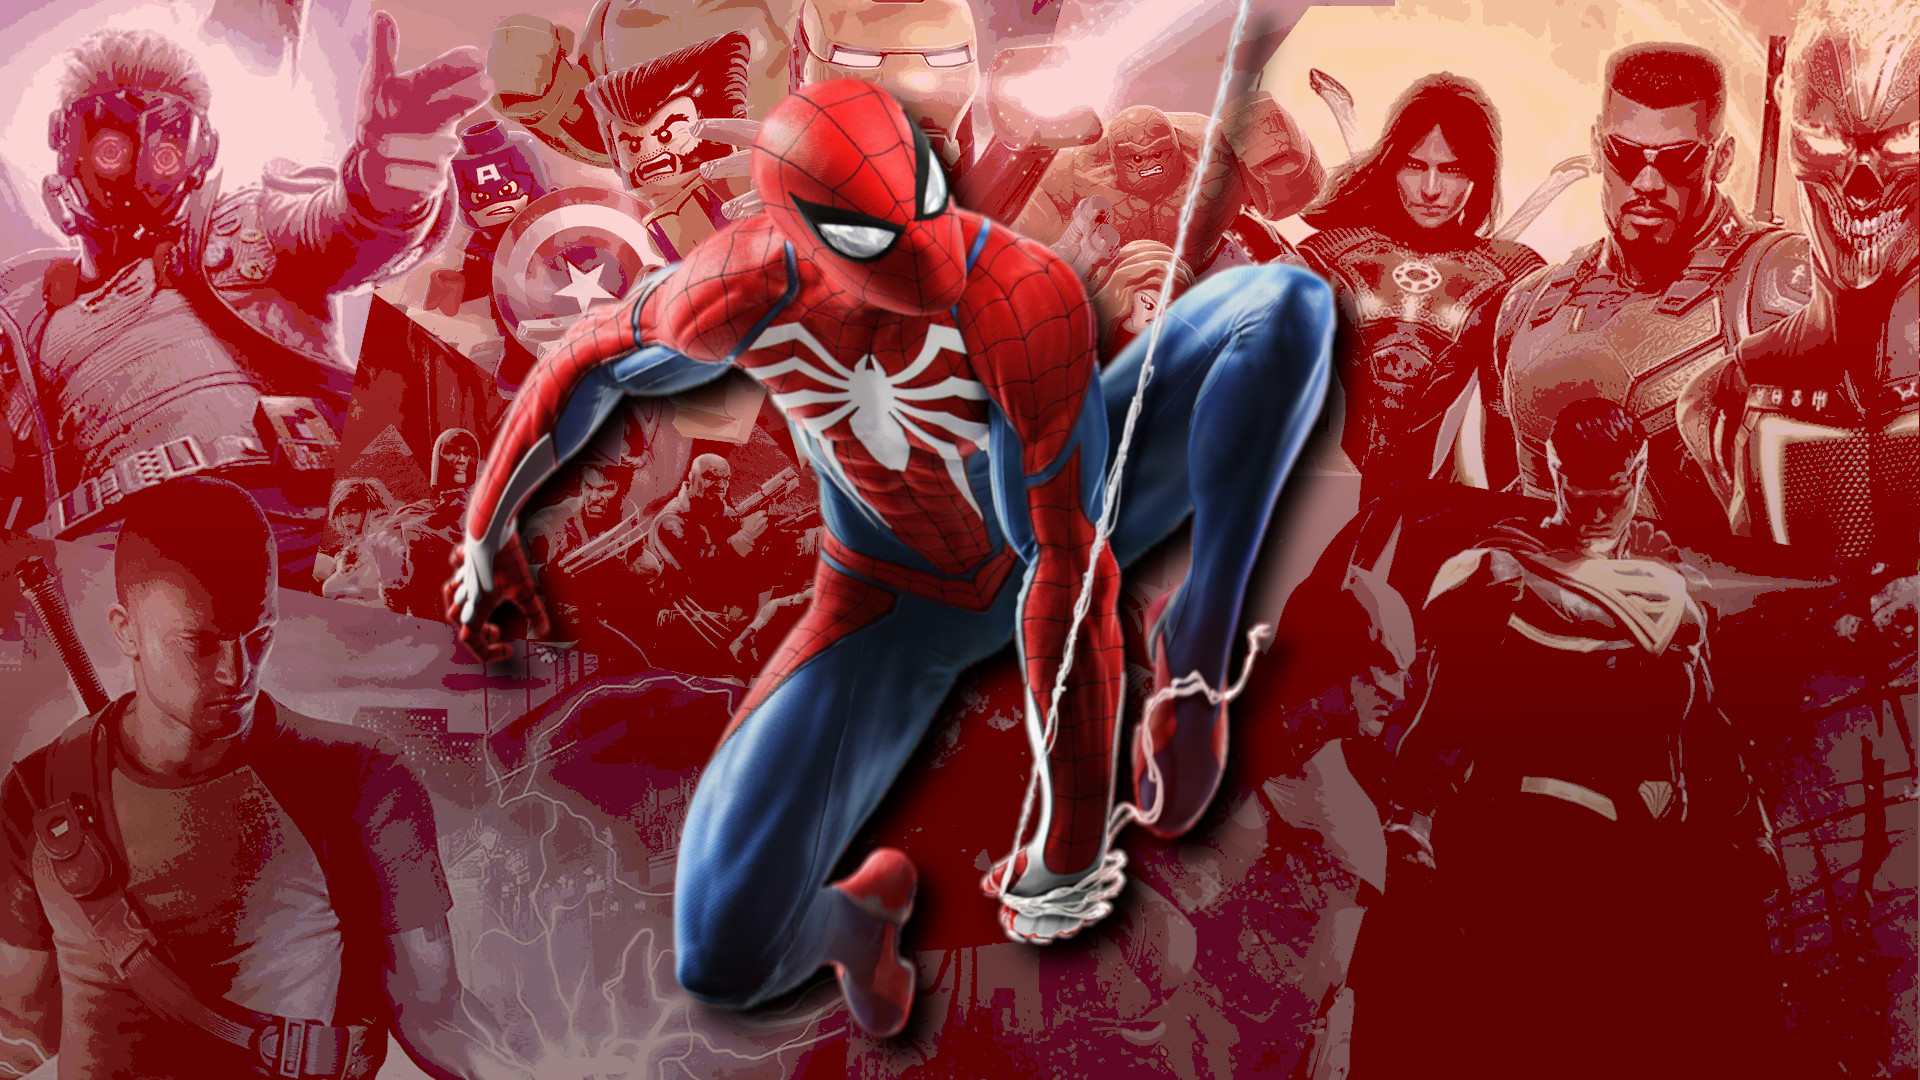 Spider-Man 4 rumored to have Kingpin as villain - Dexerto